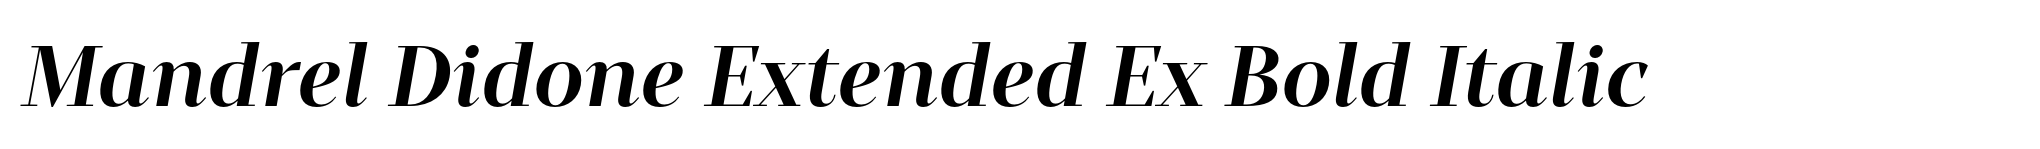 Mandrel Didone Extended Ex Bold Italic image